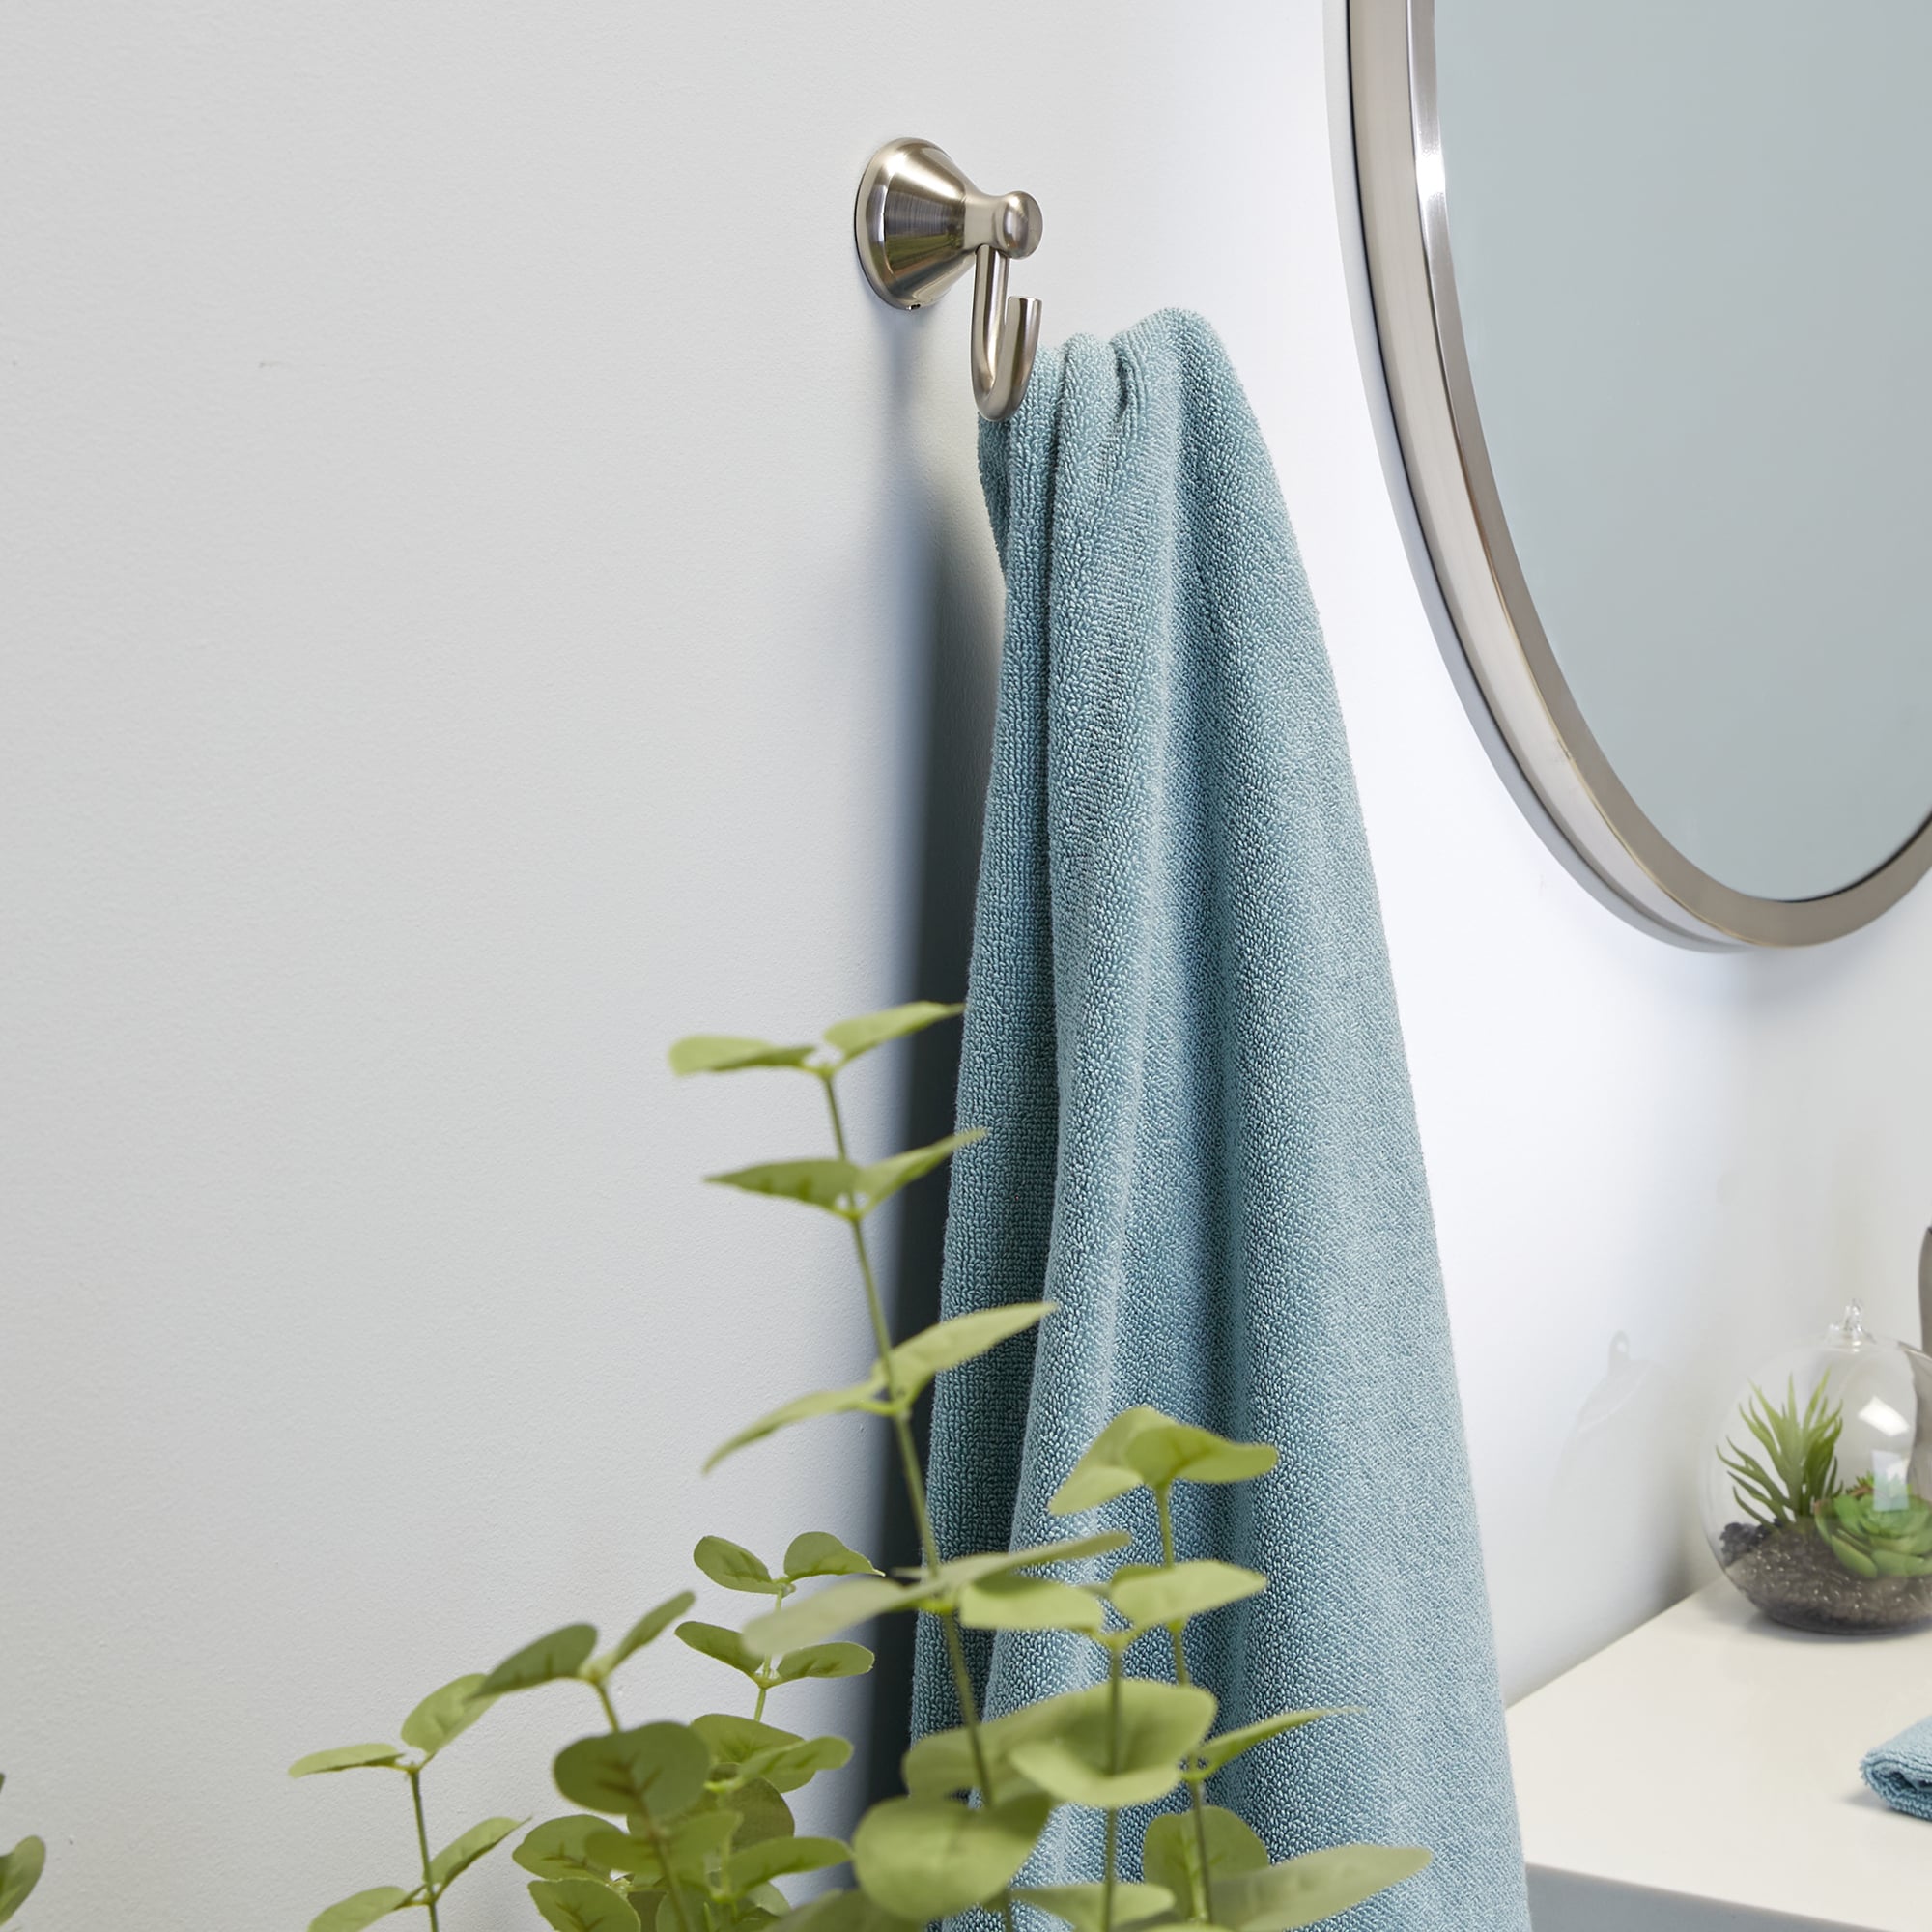 How to Hang Bathroom Towel Hooks – Love & Renovations